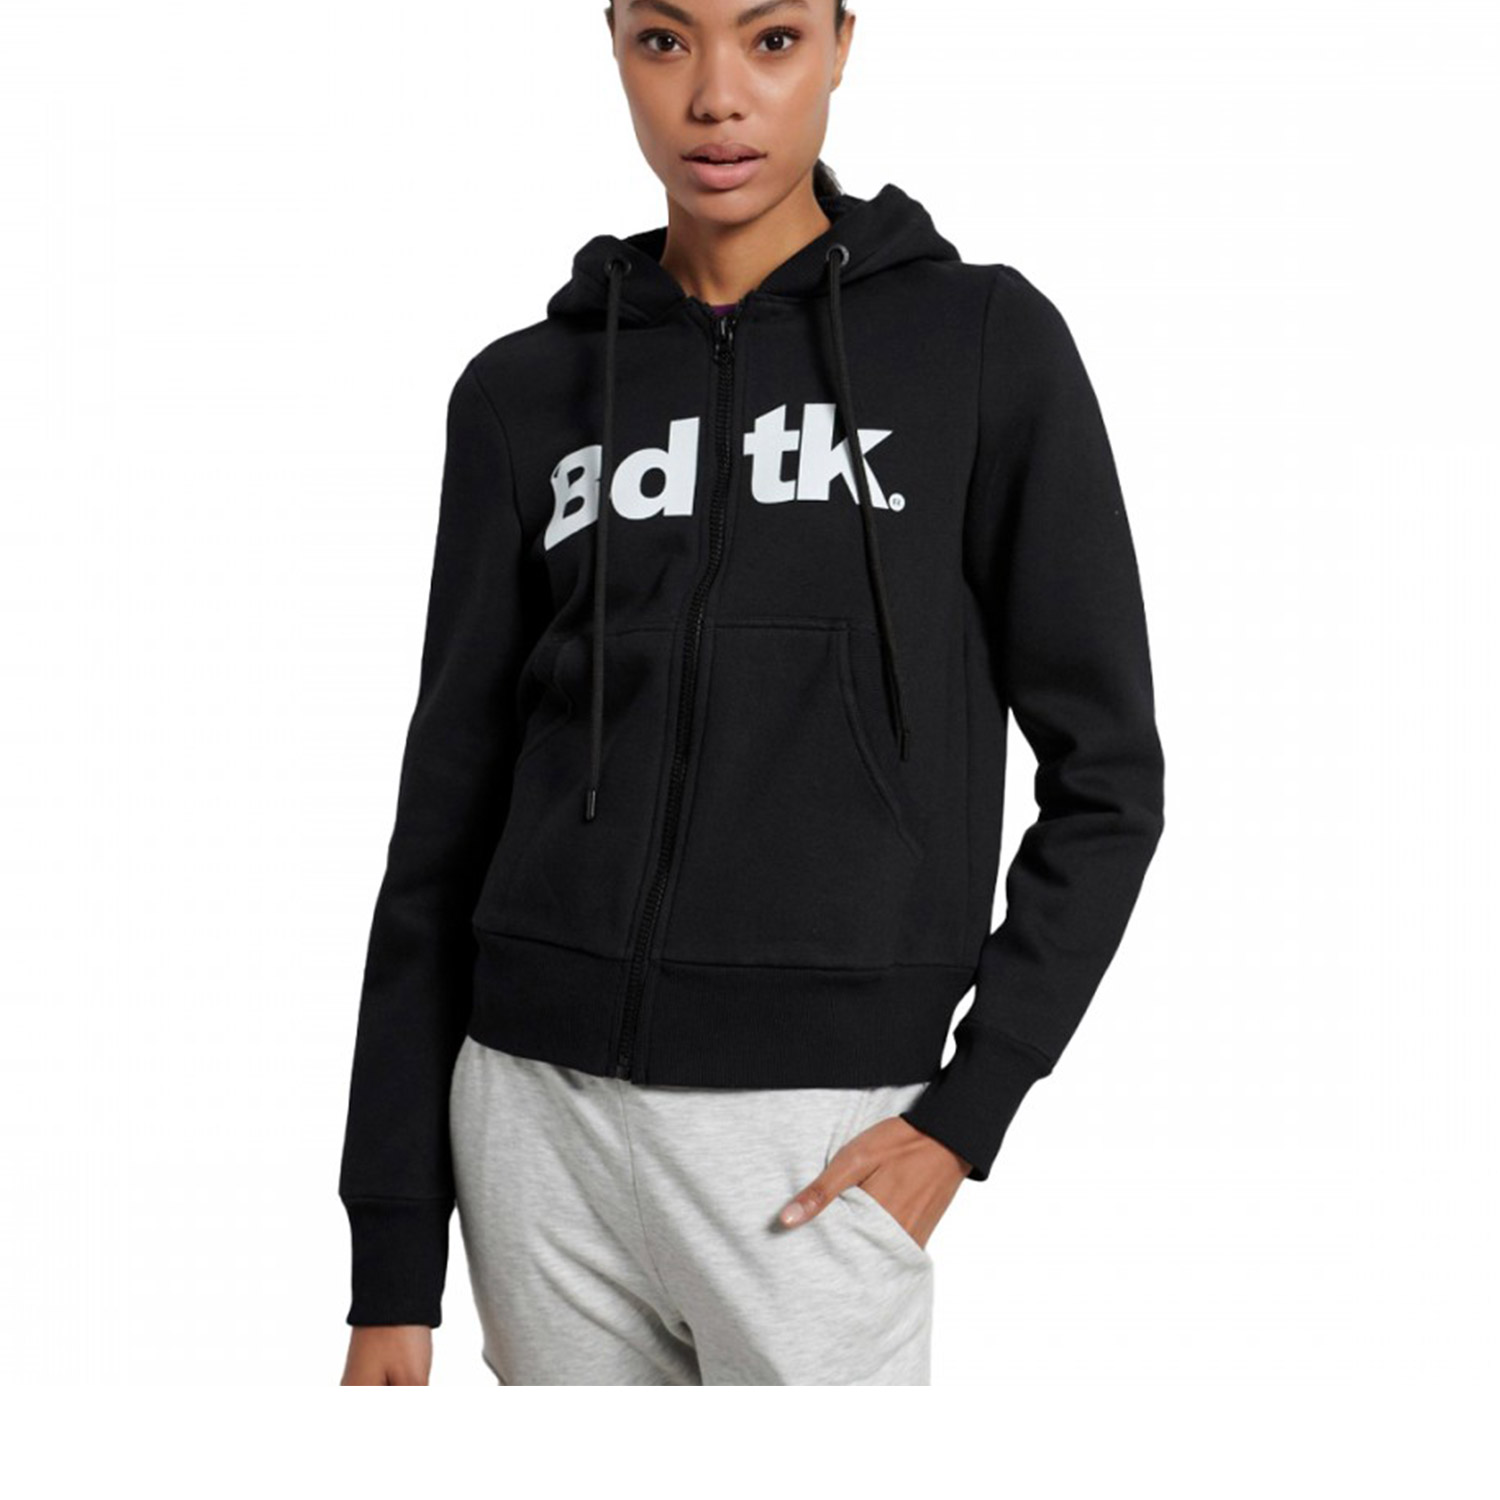 Bodytalk W Zip Hooded Sweater Black (1222-900522-00100)